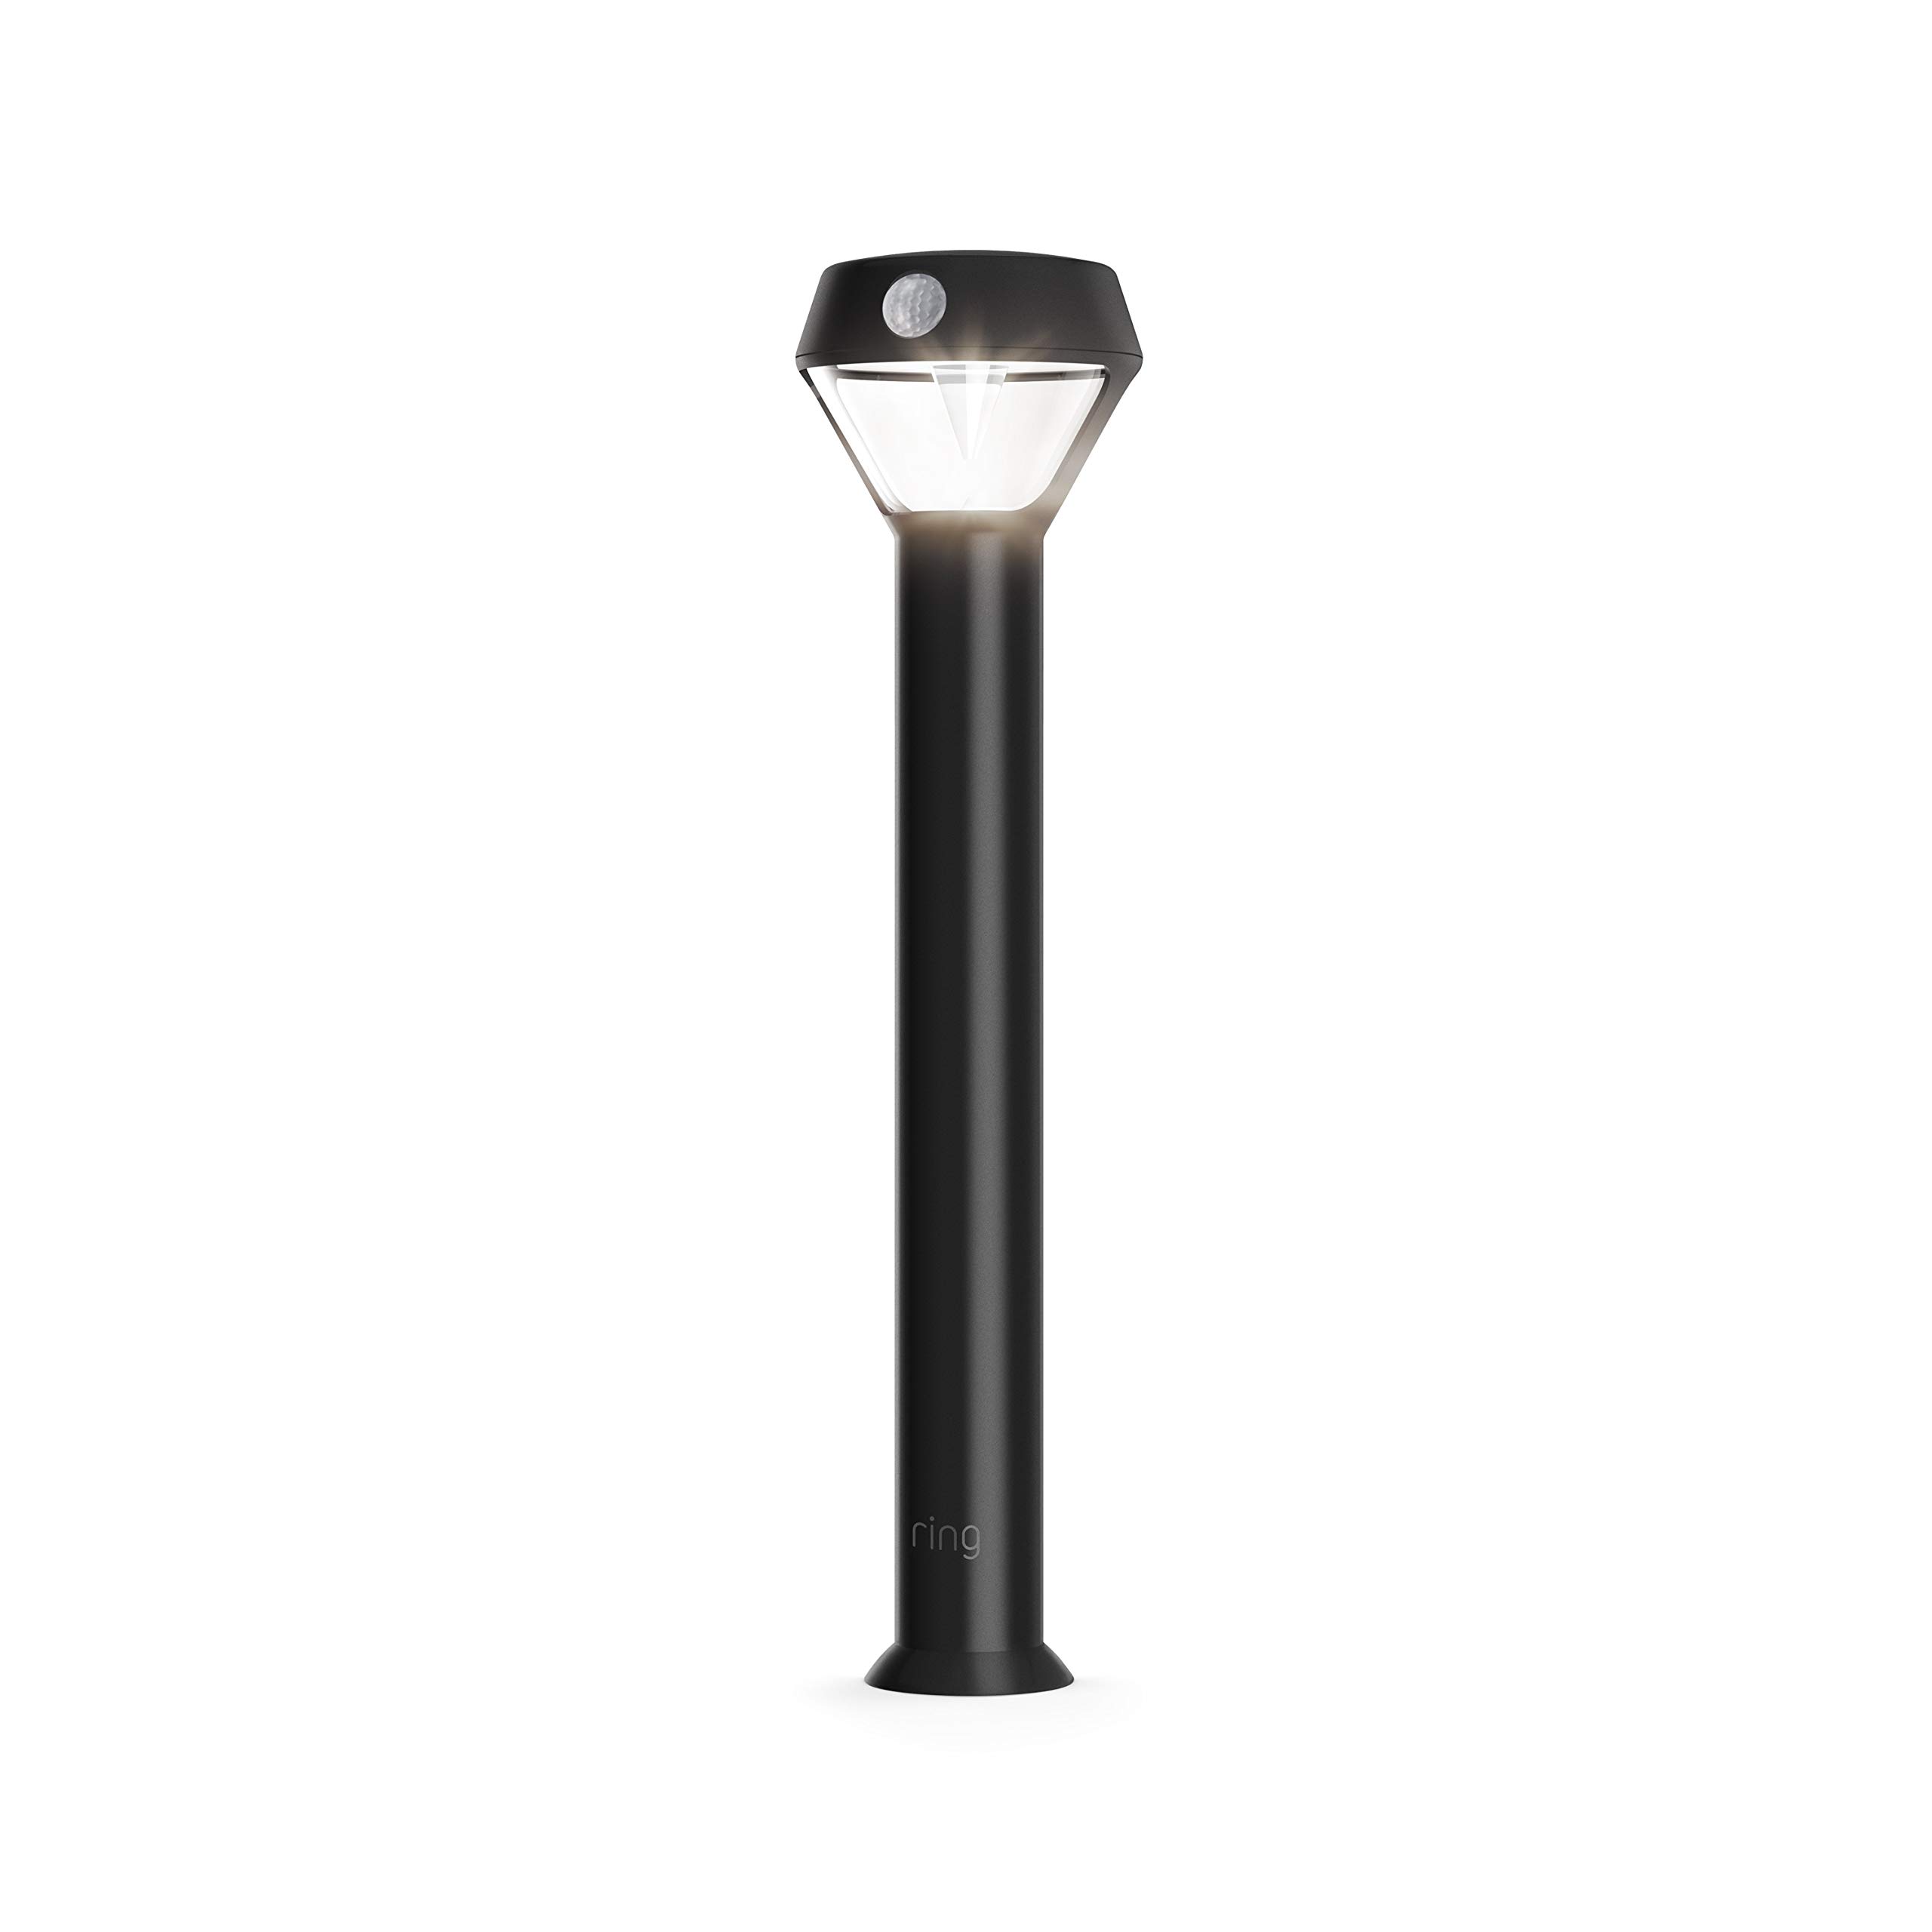 Ring Solar Pathlight - Outdoor Motion-Sensor Security Light, Black (Bridge required)